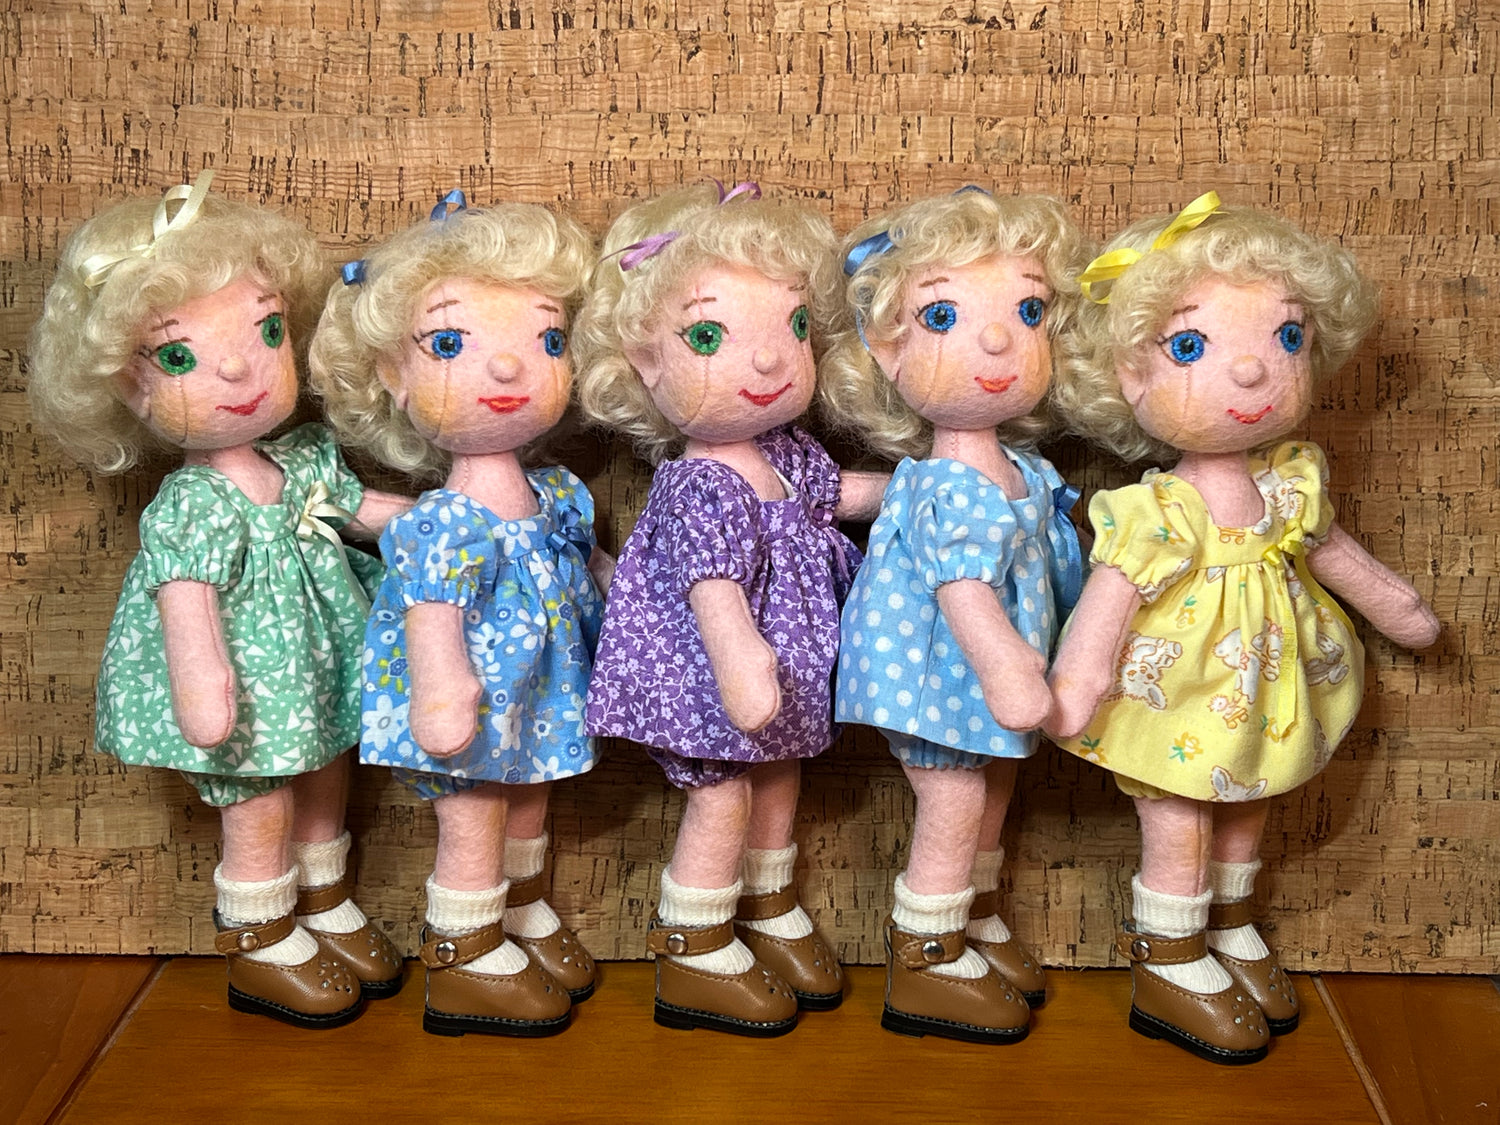 Dolly Dingle Magnetic Paper Dolls – Doll Peddlar